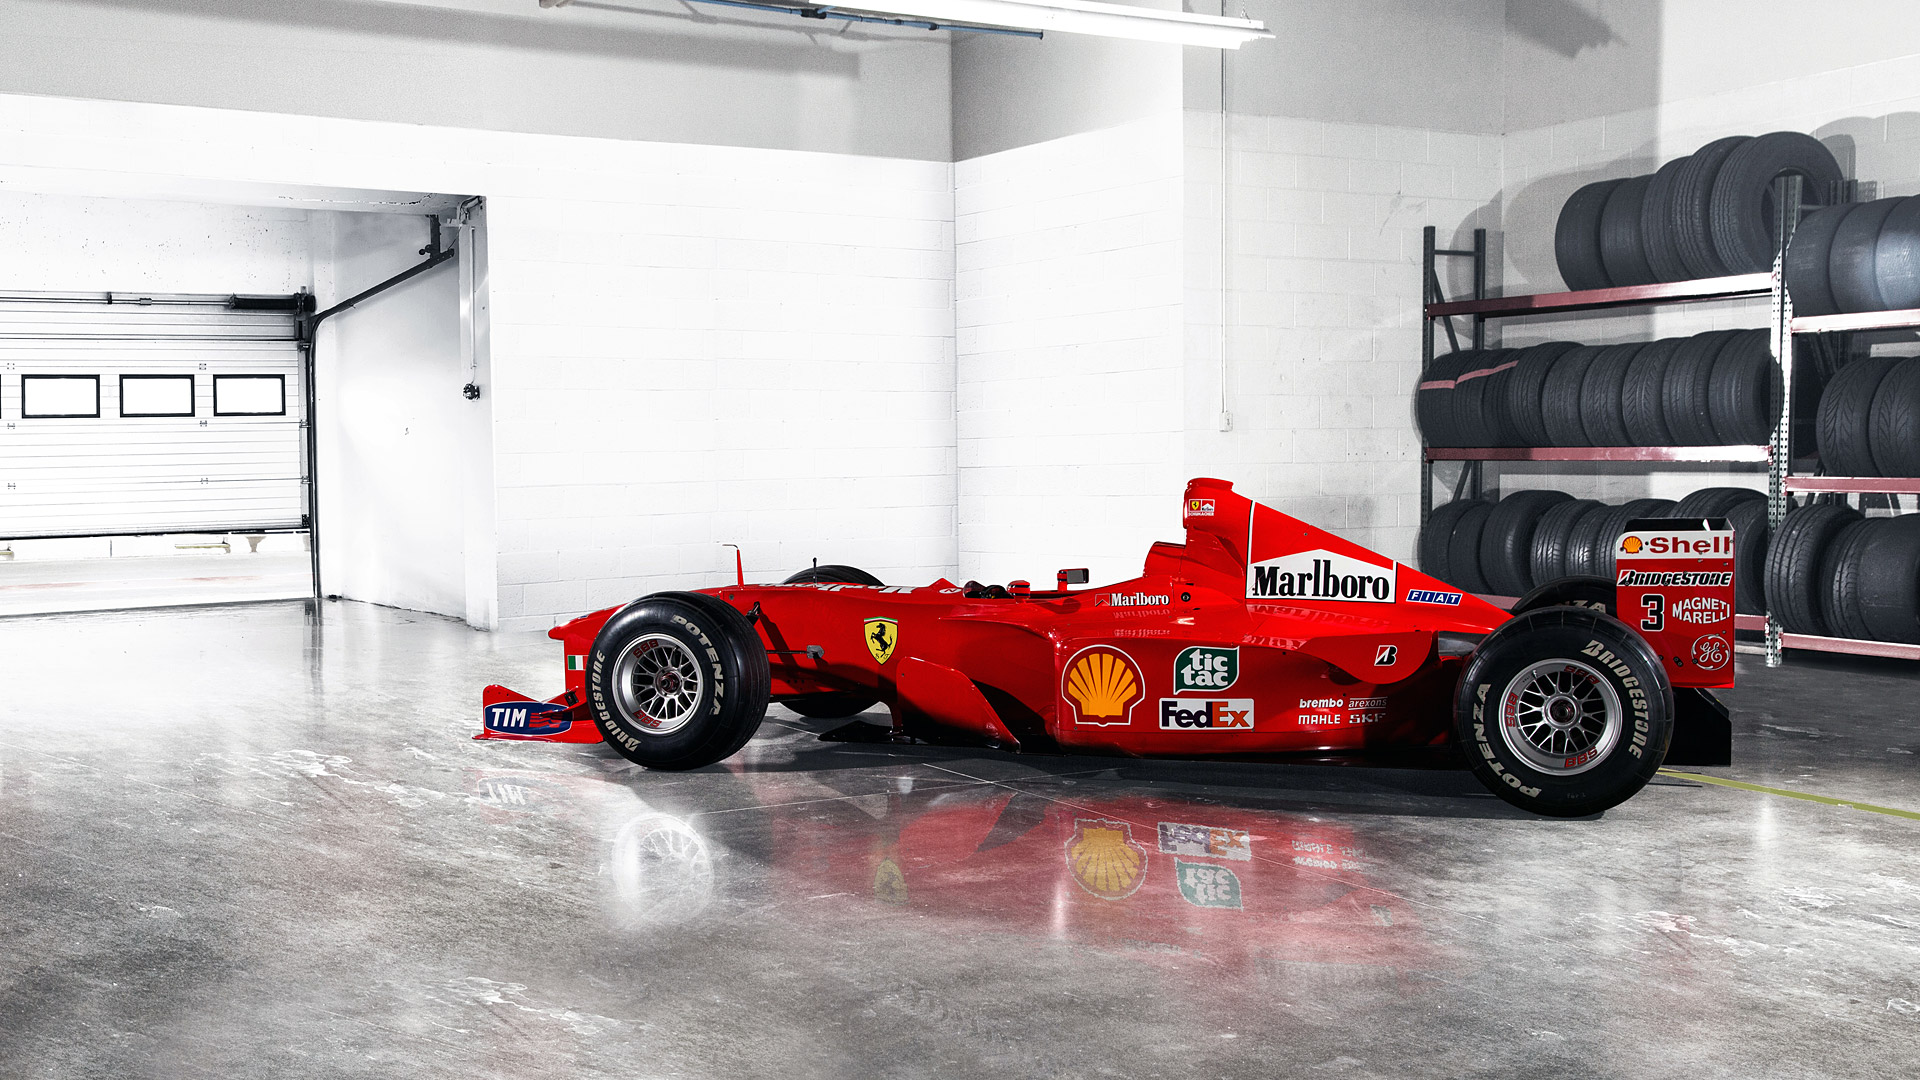  2000 Ferrari F2000 Wallpaper.